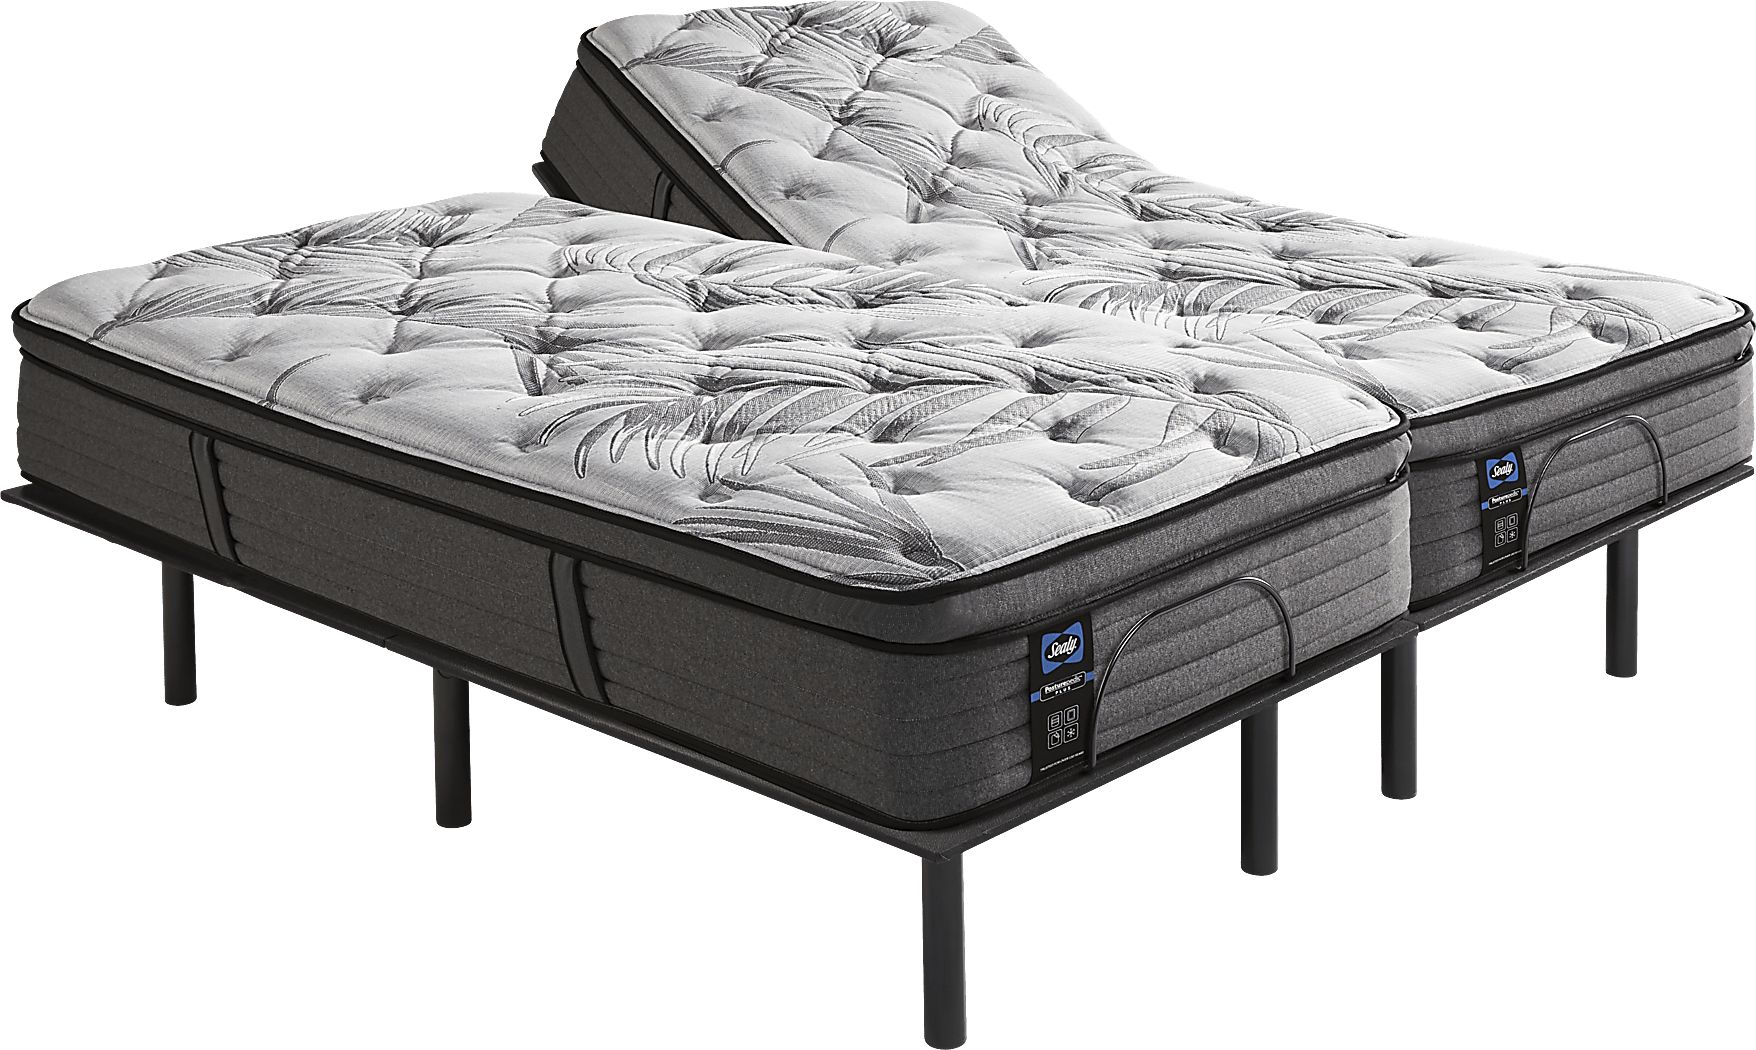 split king 13 inch sleep science mattresses at